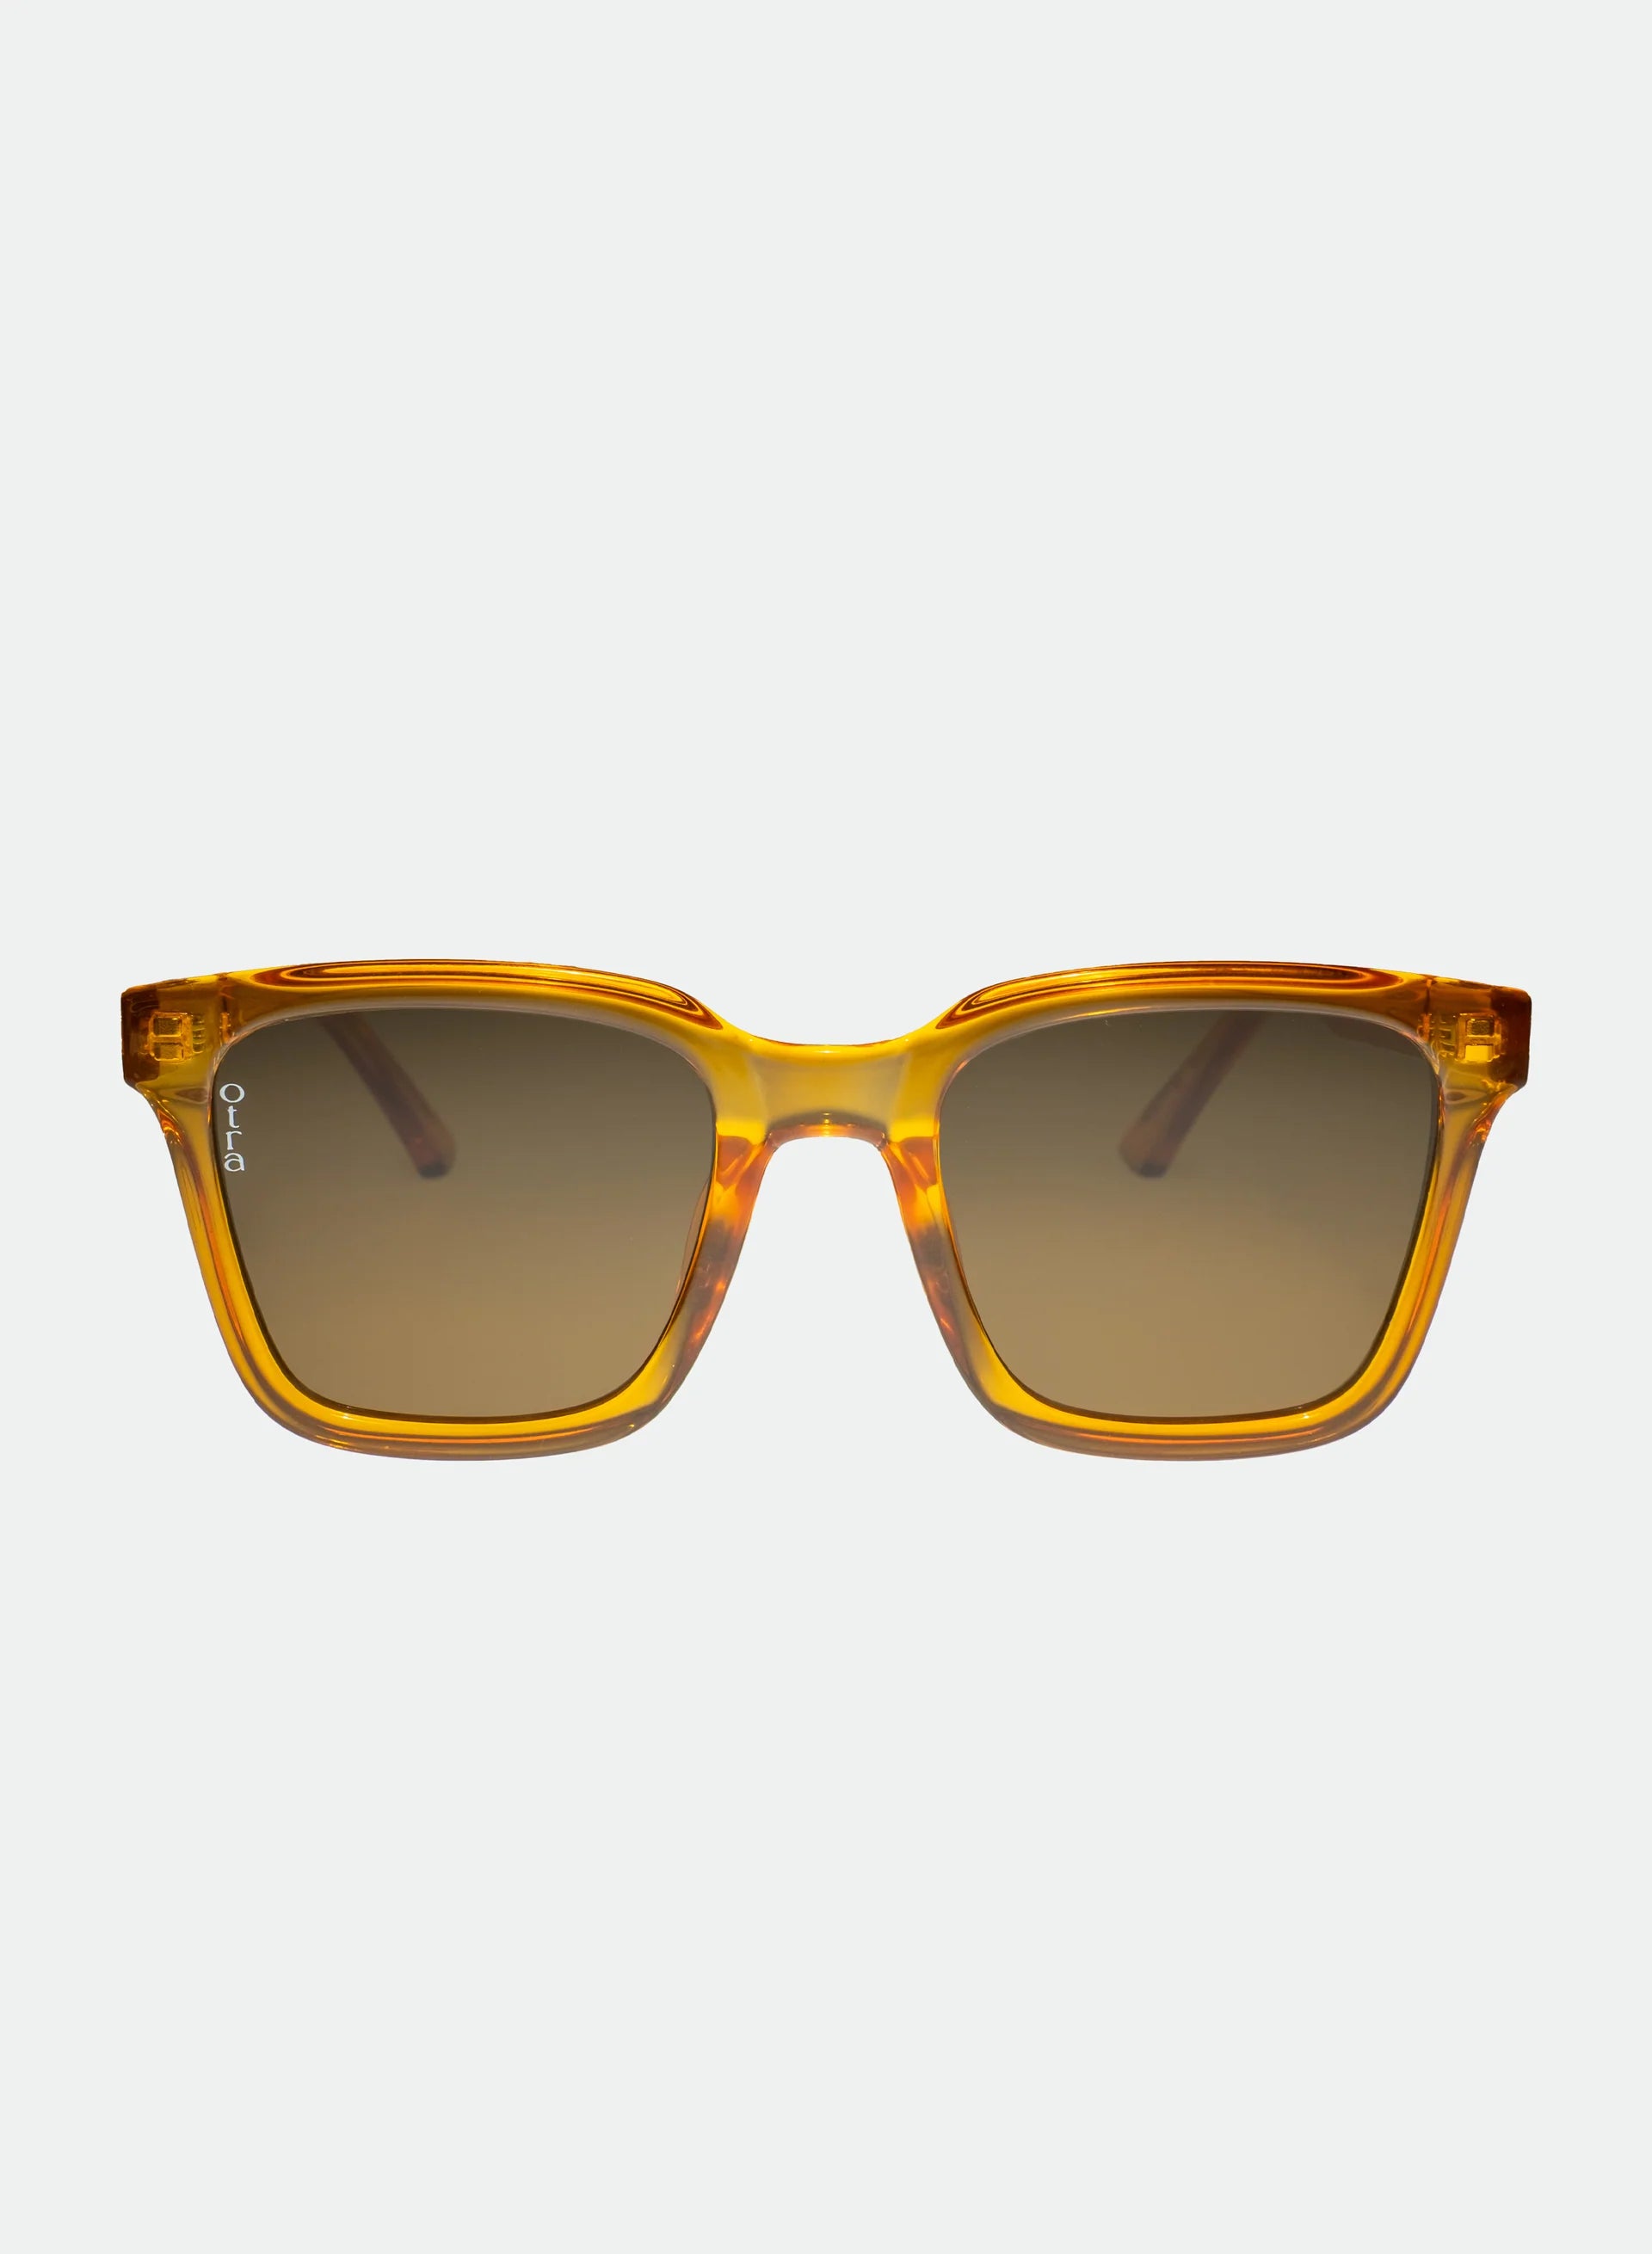 Fyn Sunglasses Orange Brown Fade